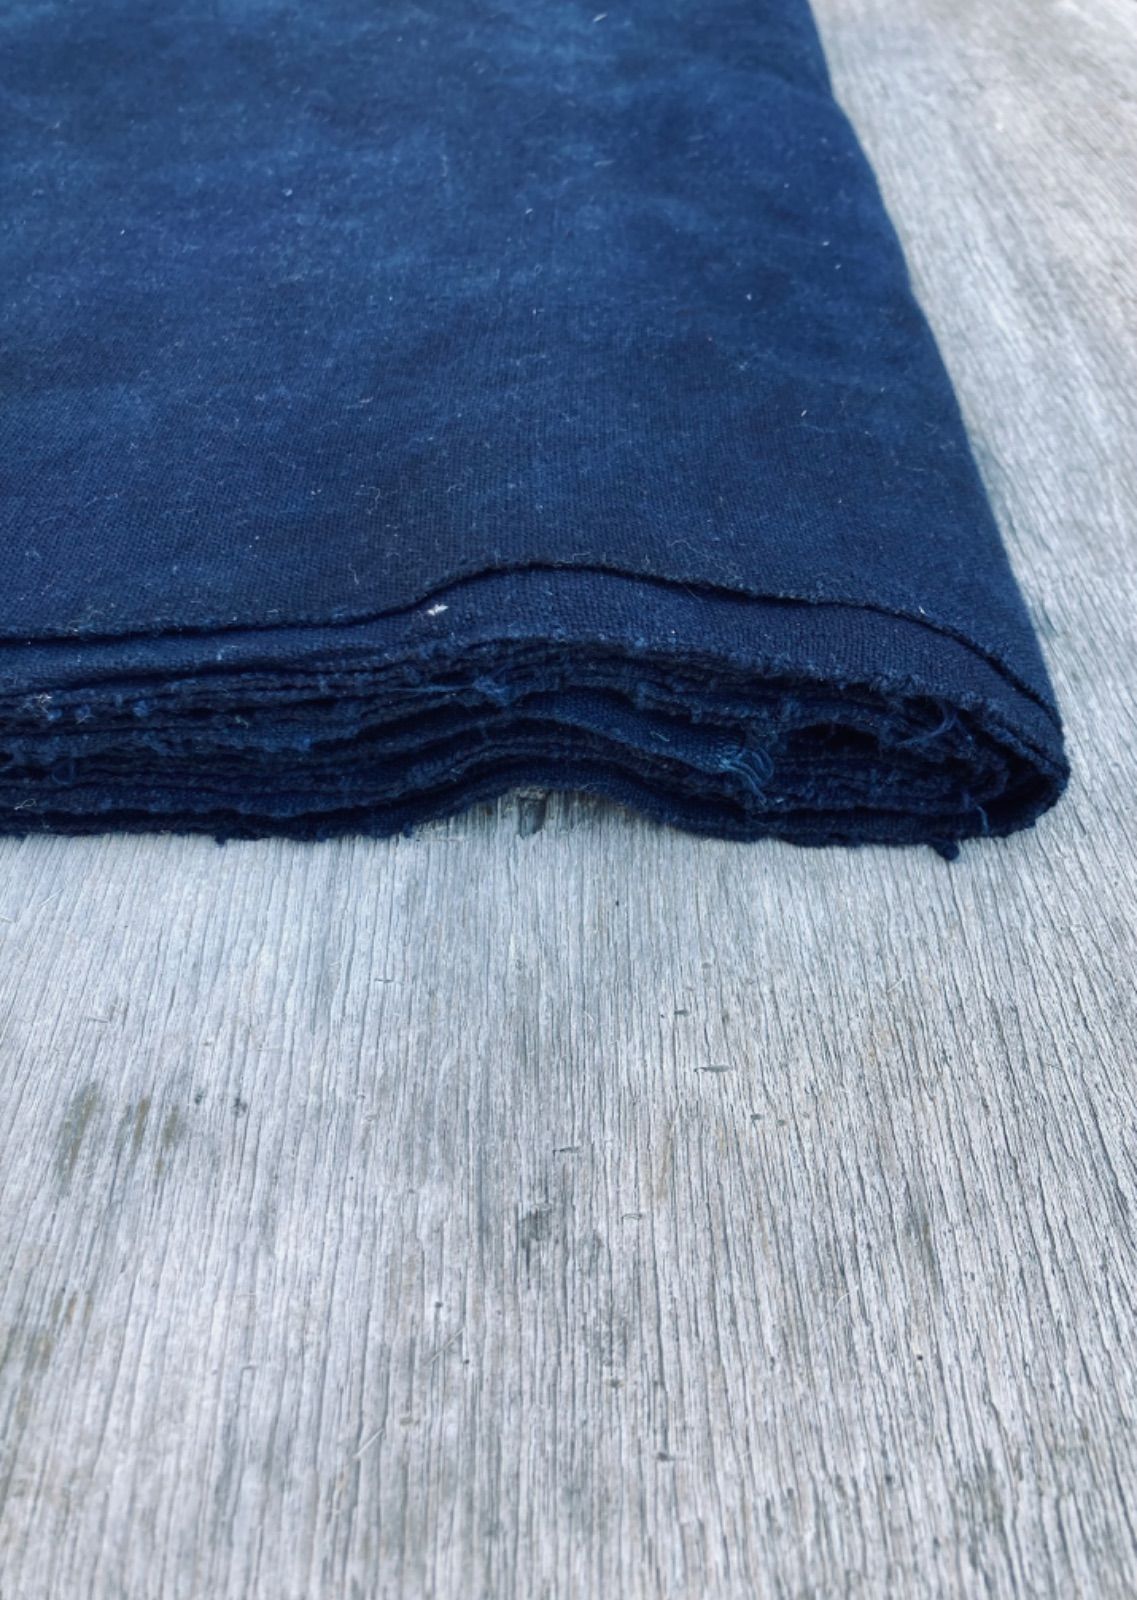 RFB−25 黒藍*7m反物 レンテン族布 手織りラオス布 素材/材料 生地/糸 